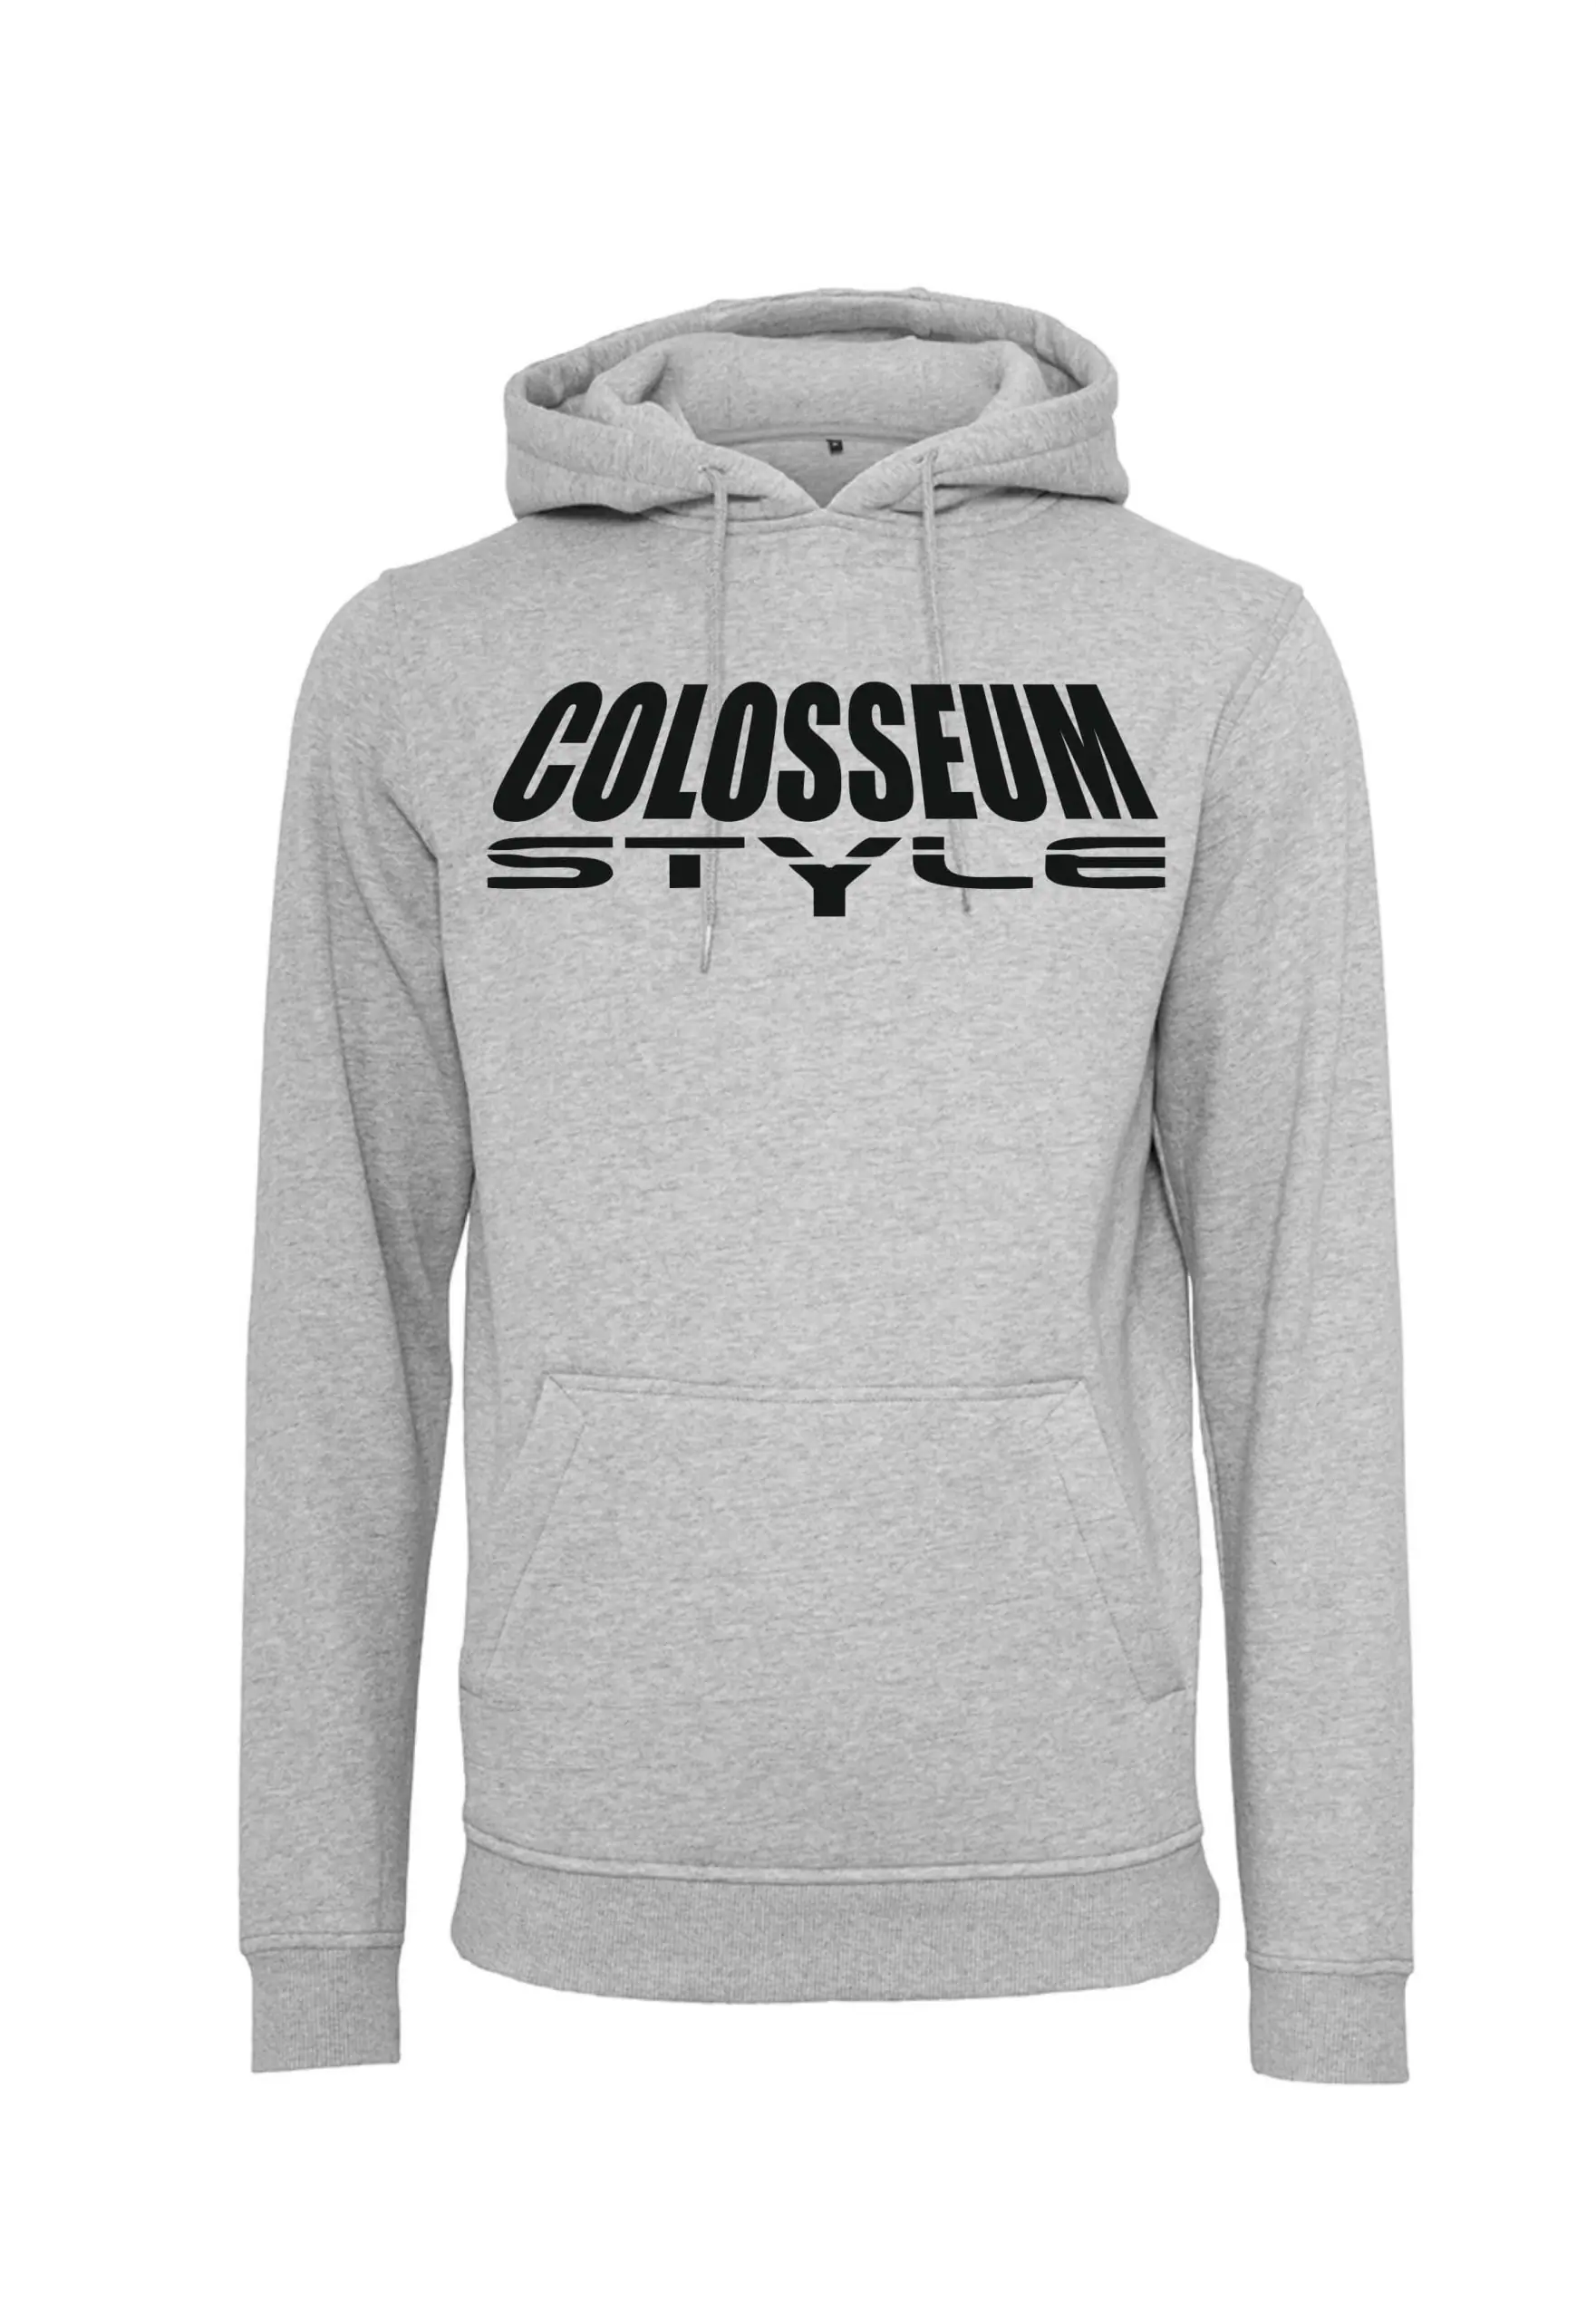 Hoodie - The Colosseum Gym